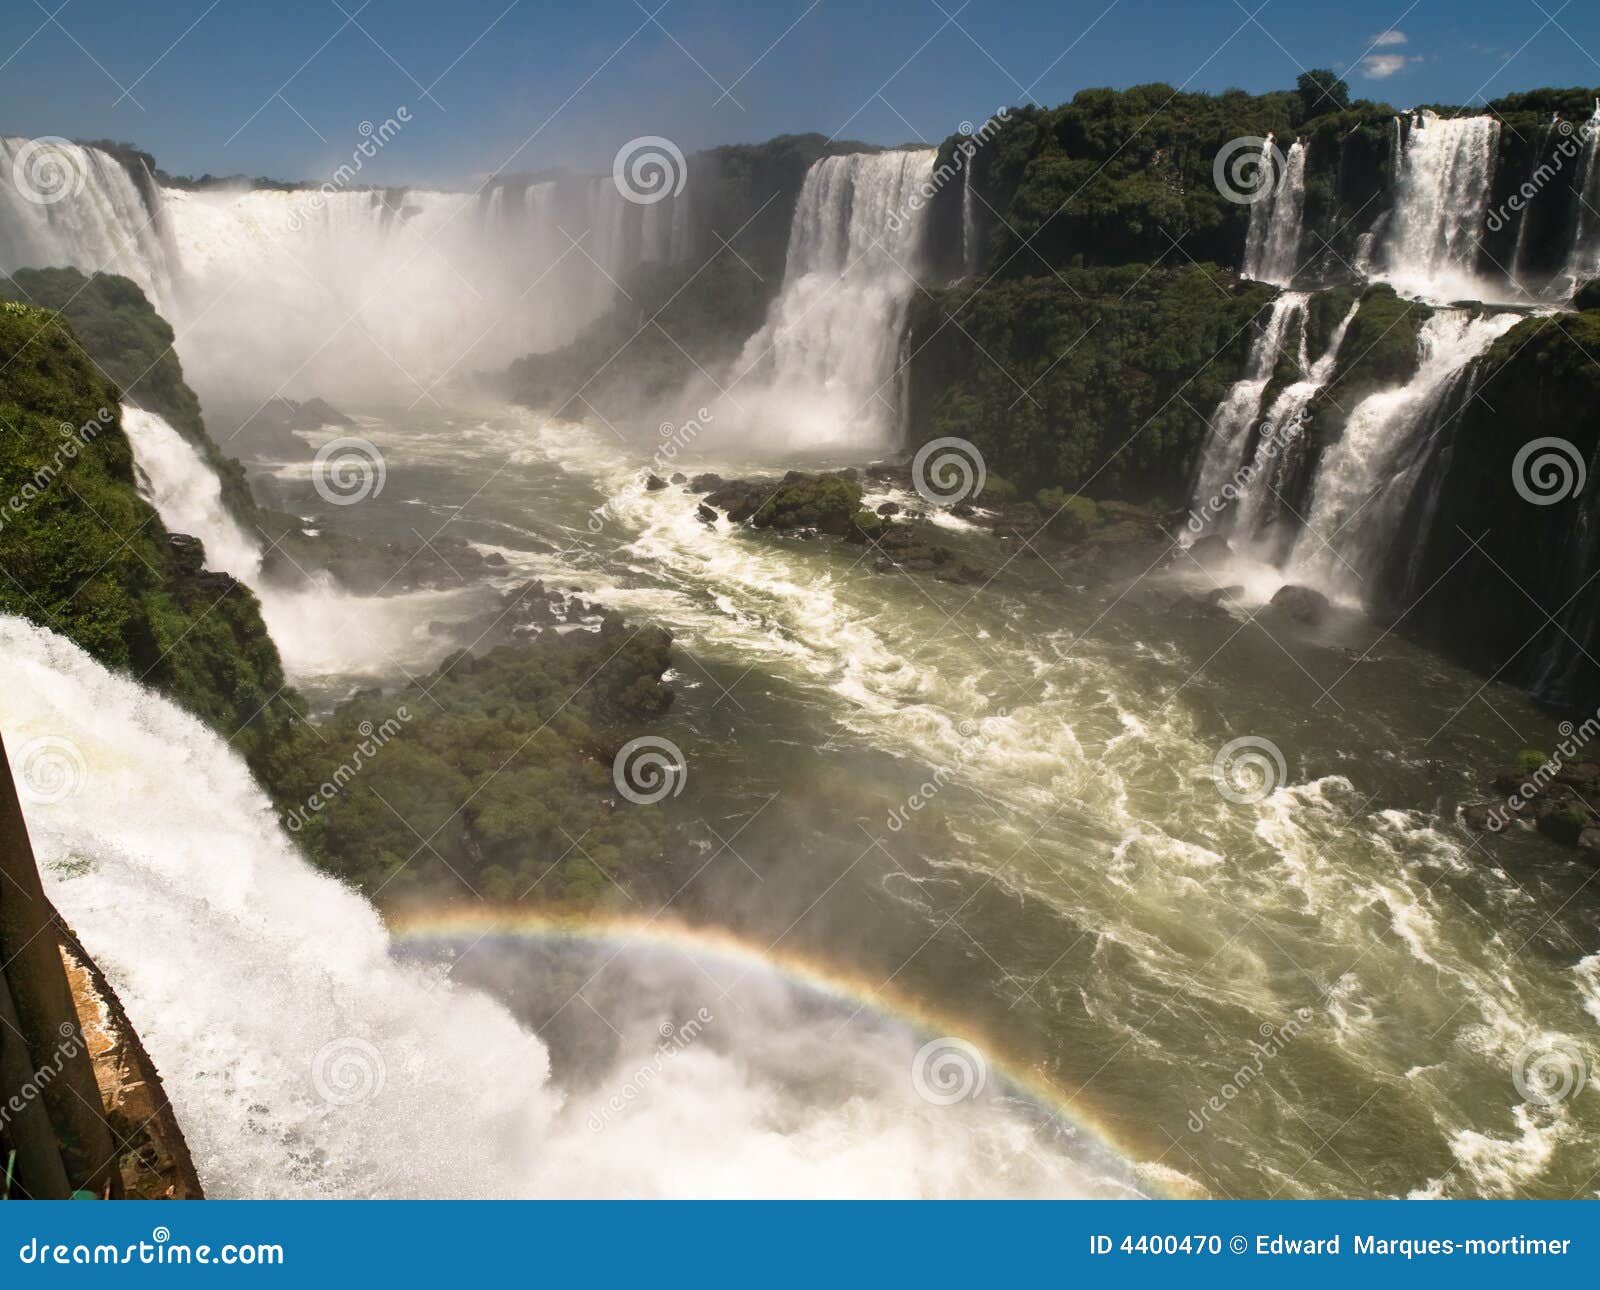 iguacu falls, brazil.